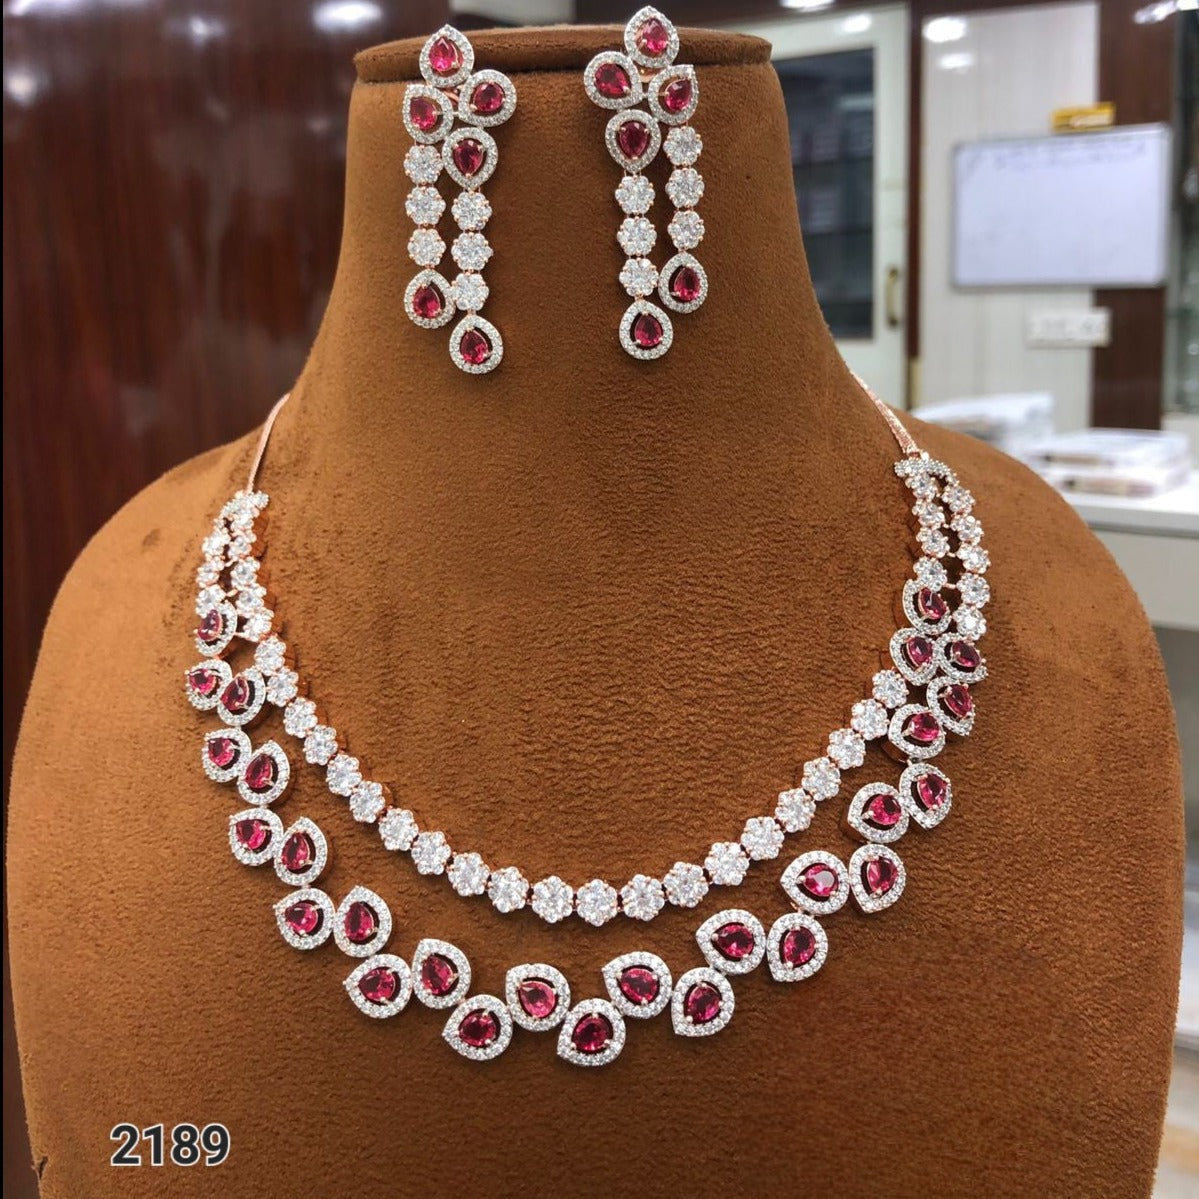 Spectacular AD Jewelry Set , American Diamond  Necklace and Earrings Jewelry set, , AD Necklace Set